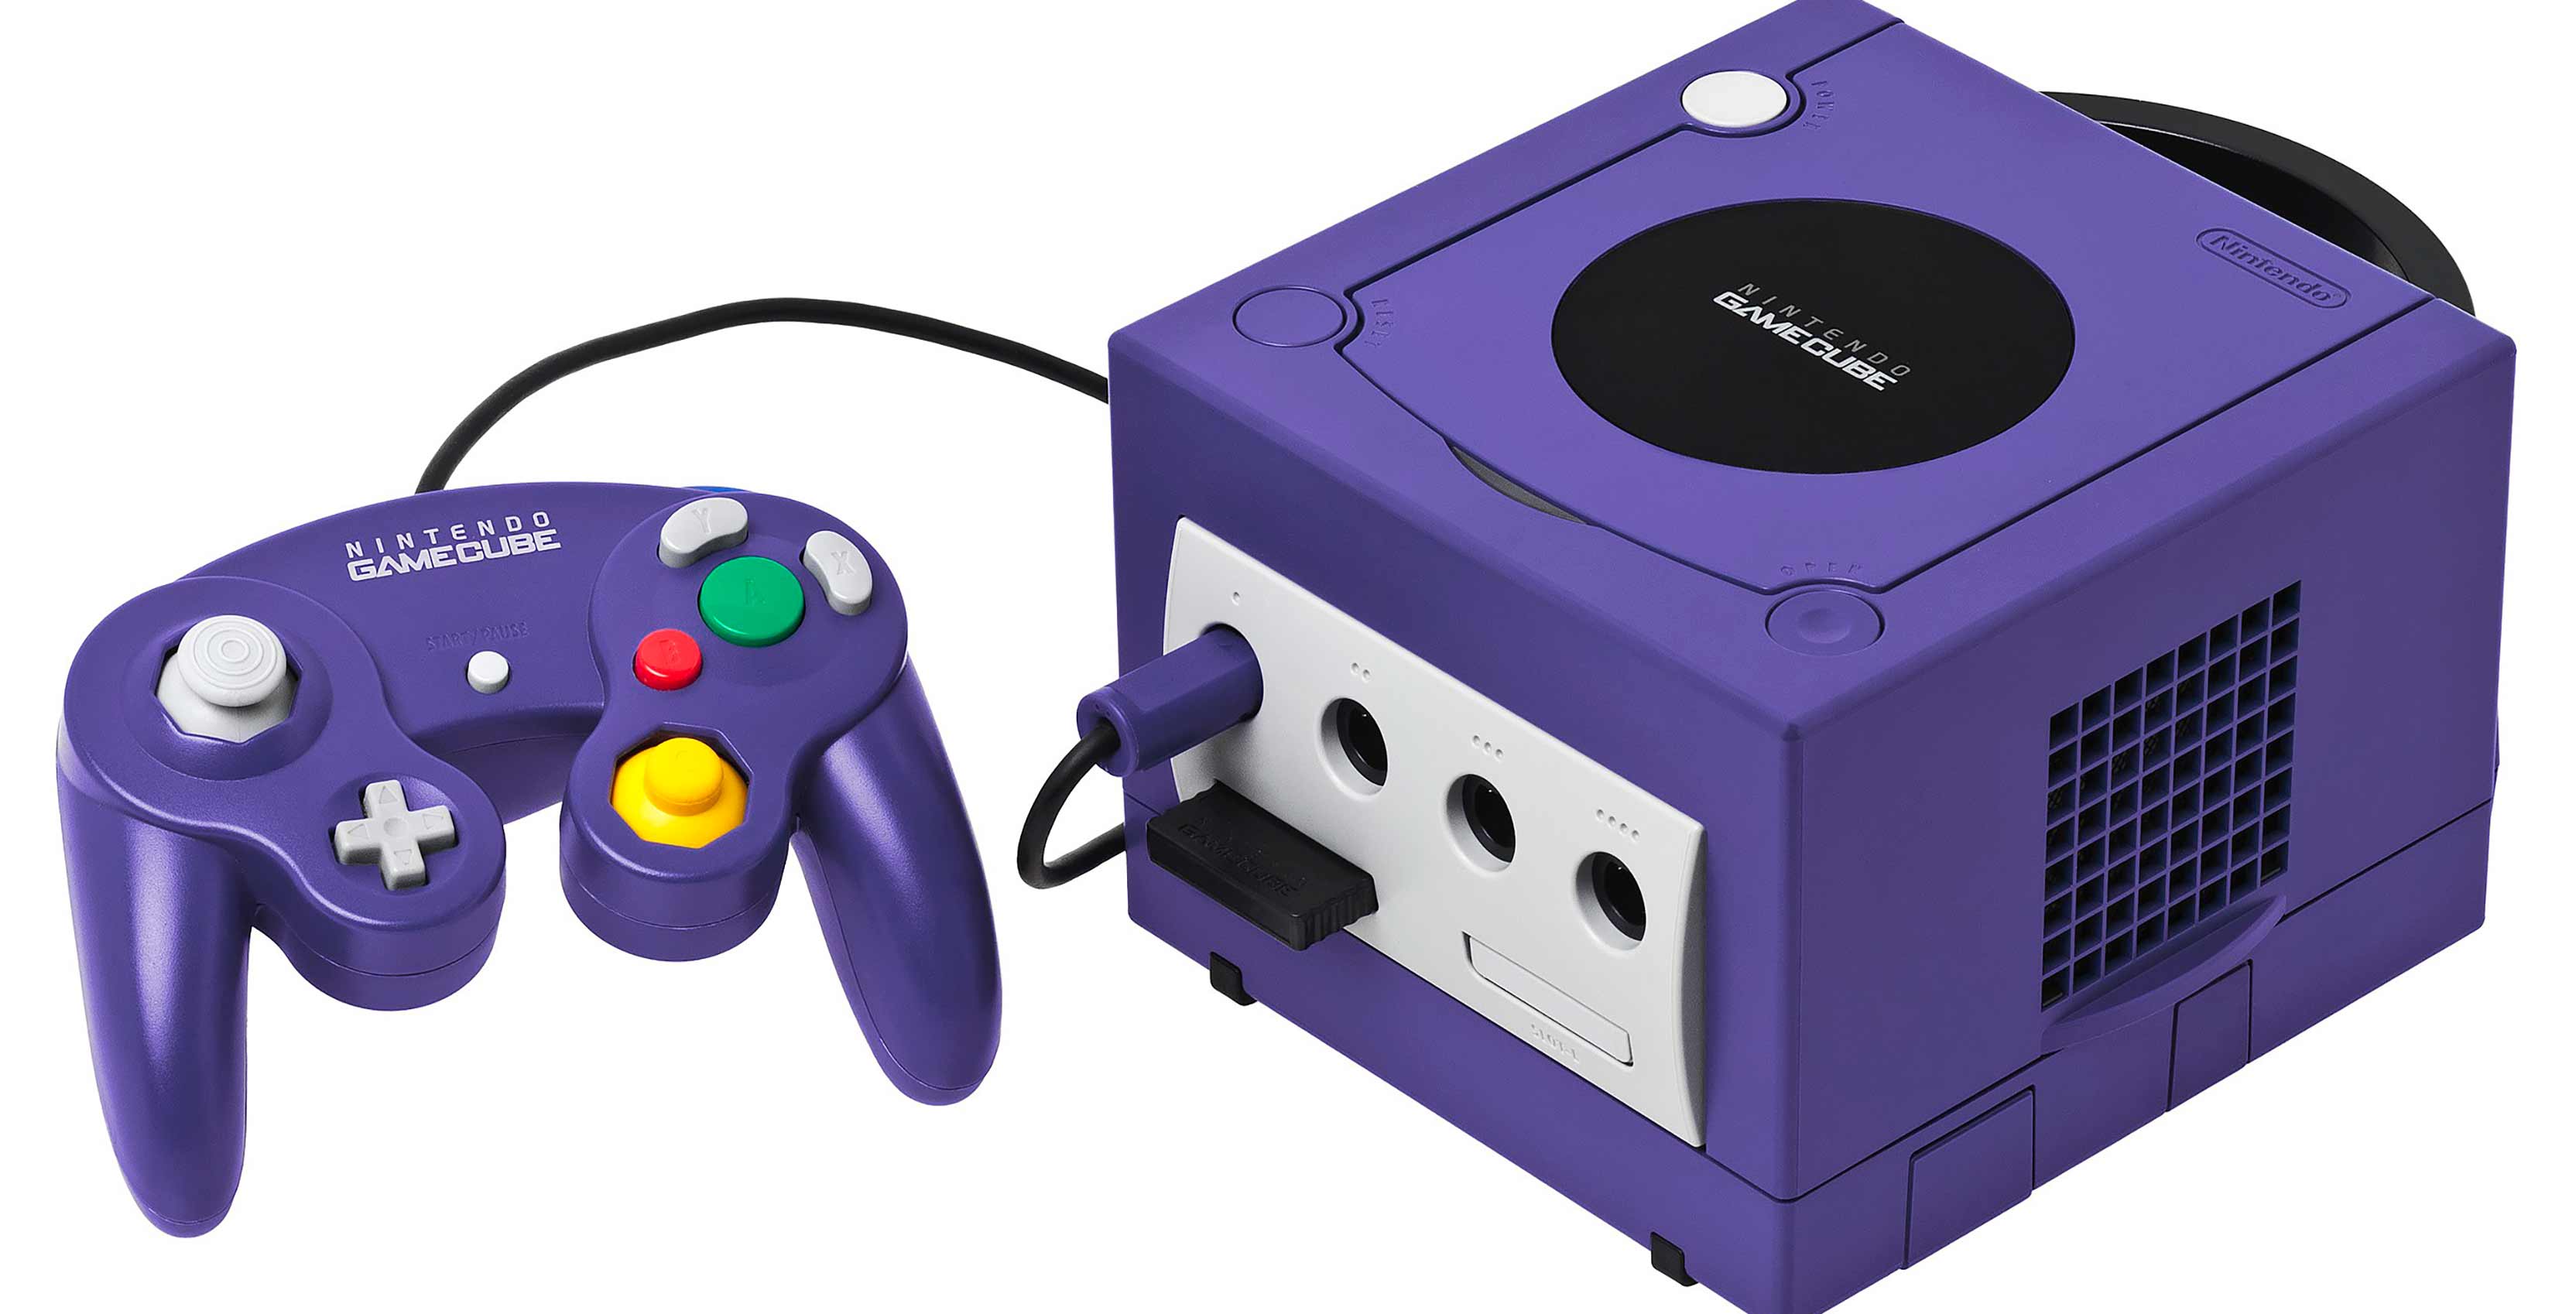 Nintendo GameCube with controller